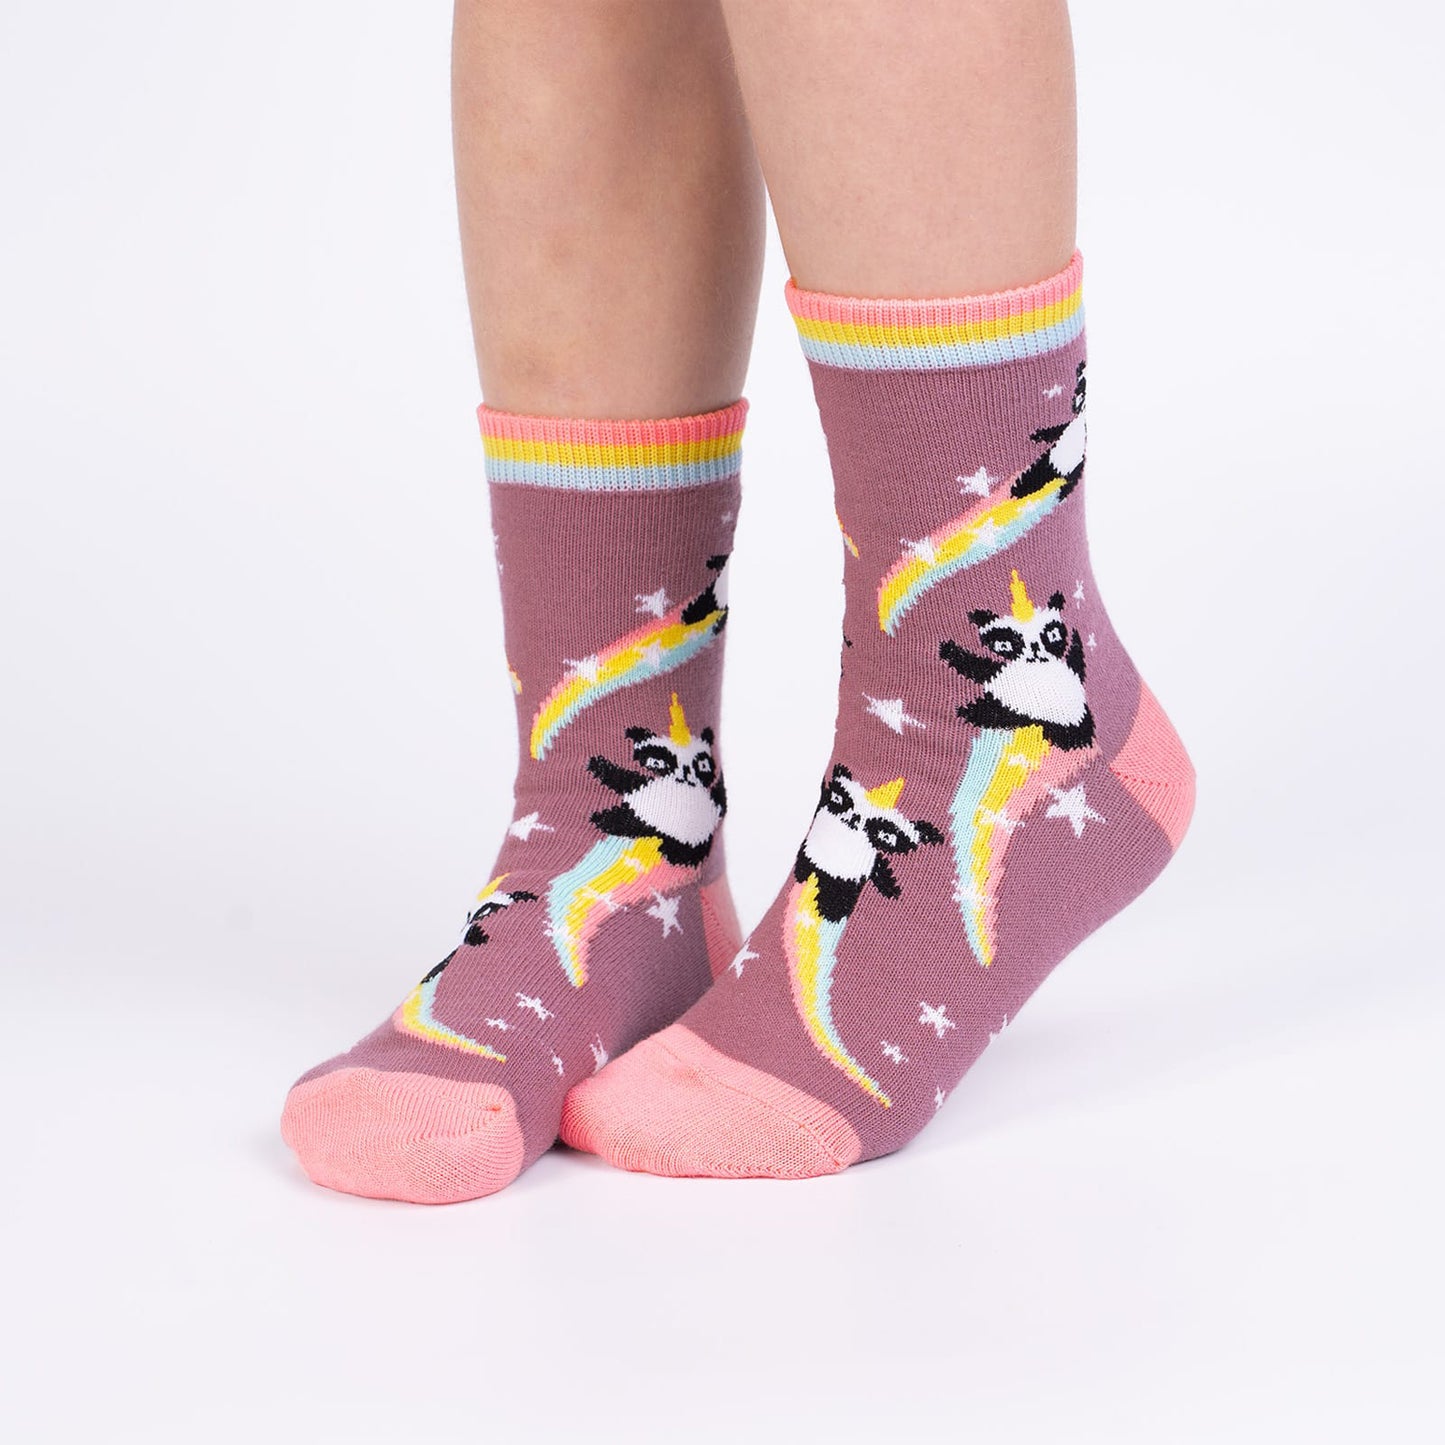 Sock It To Me Kids Crew Socks - Pandacorn (7-10 Year Olds)